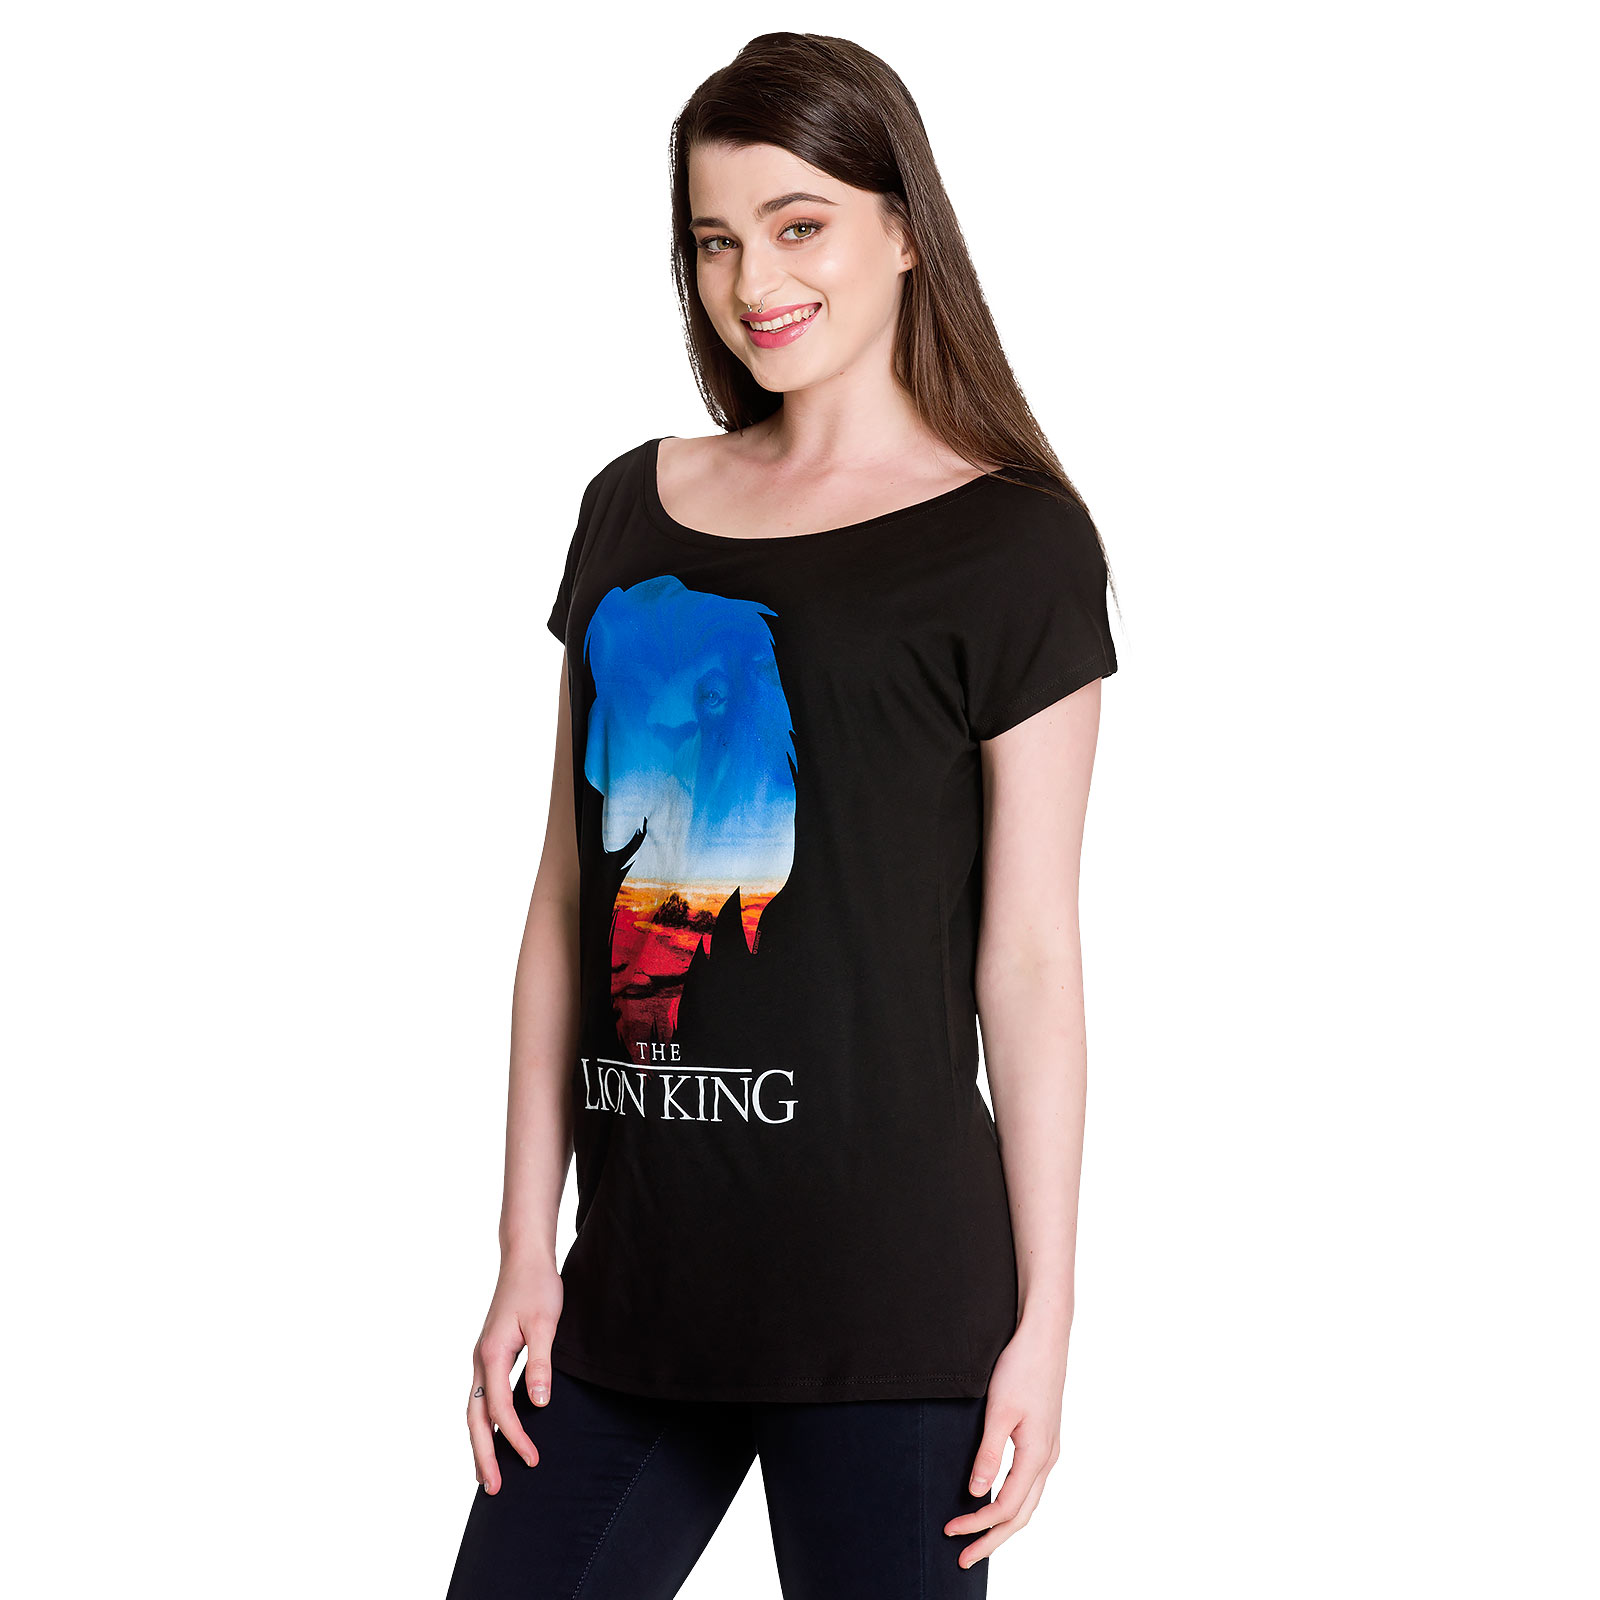 Lion King - Kings World Women's Loose Fit T-Shirt